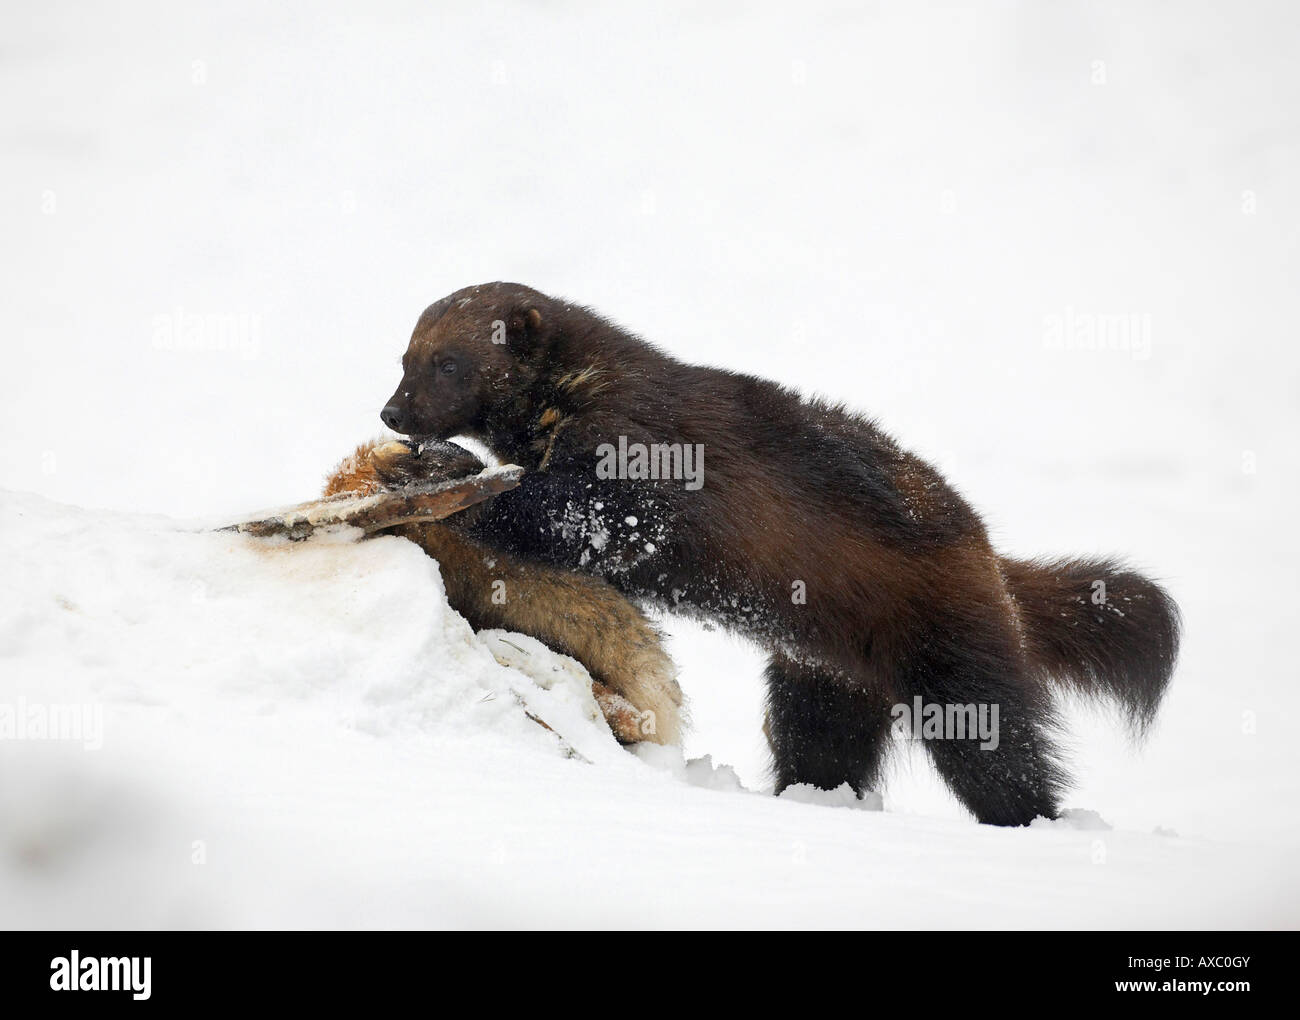 wolverine gulo gulo in snow with prey finland kuhmo AXC0GY